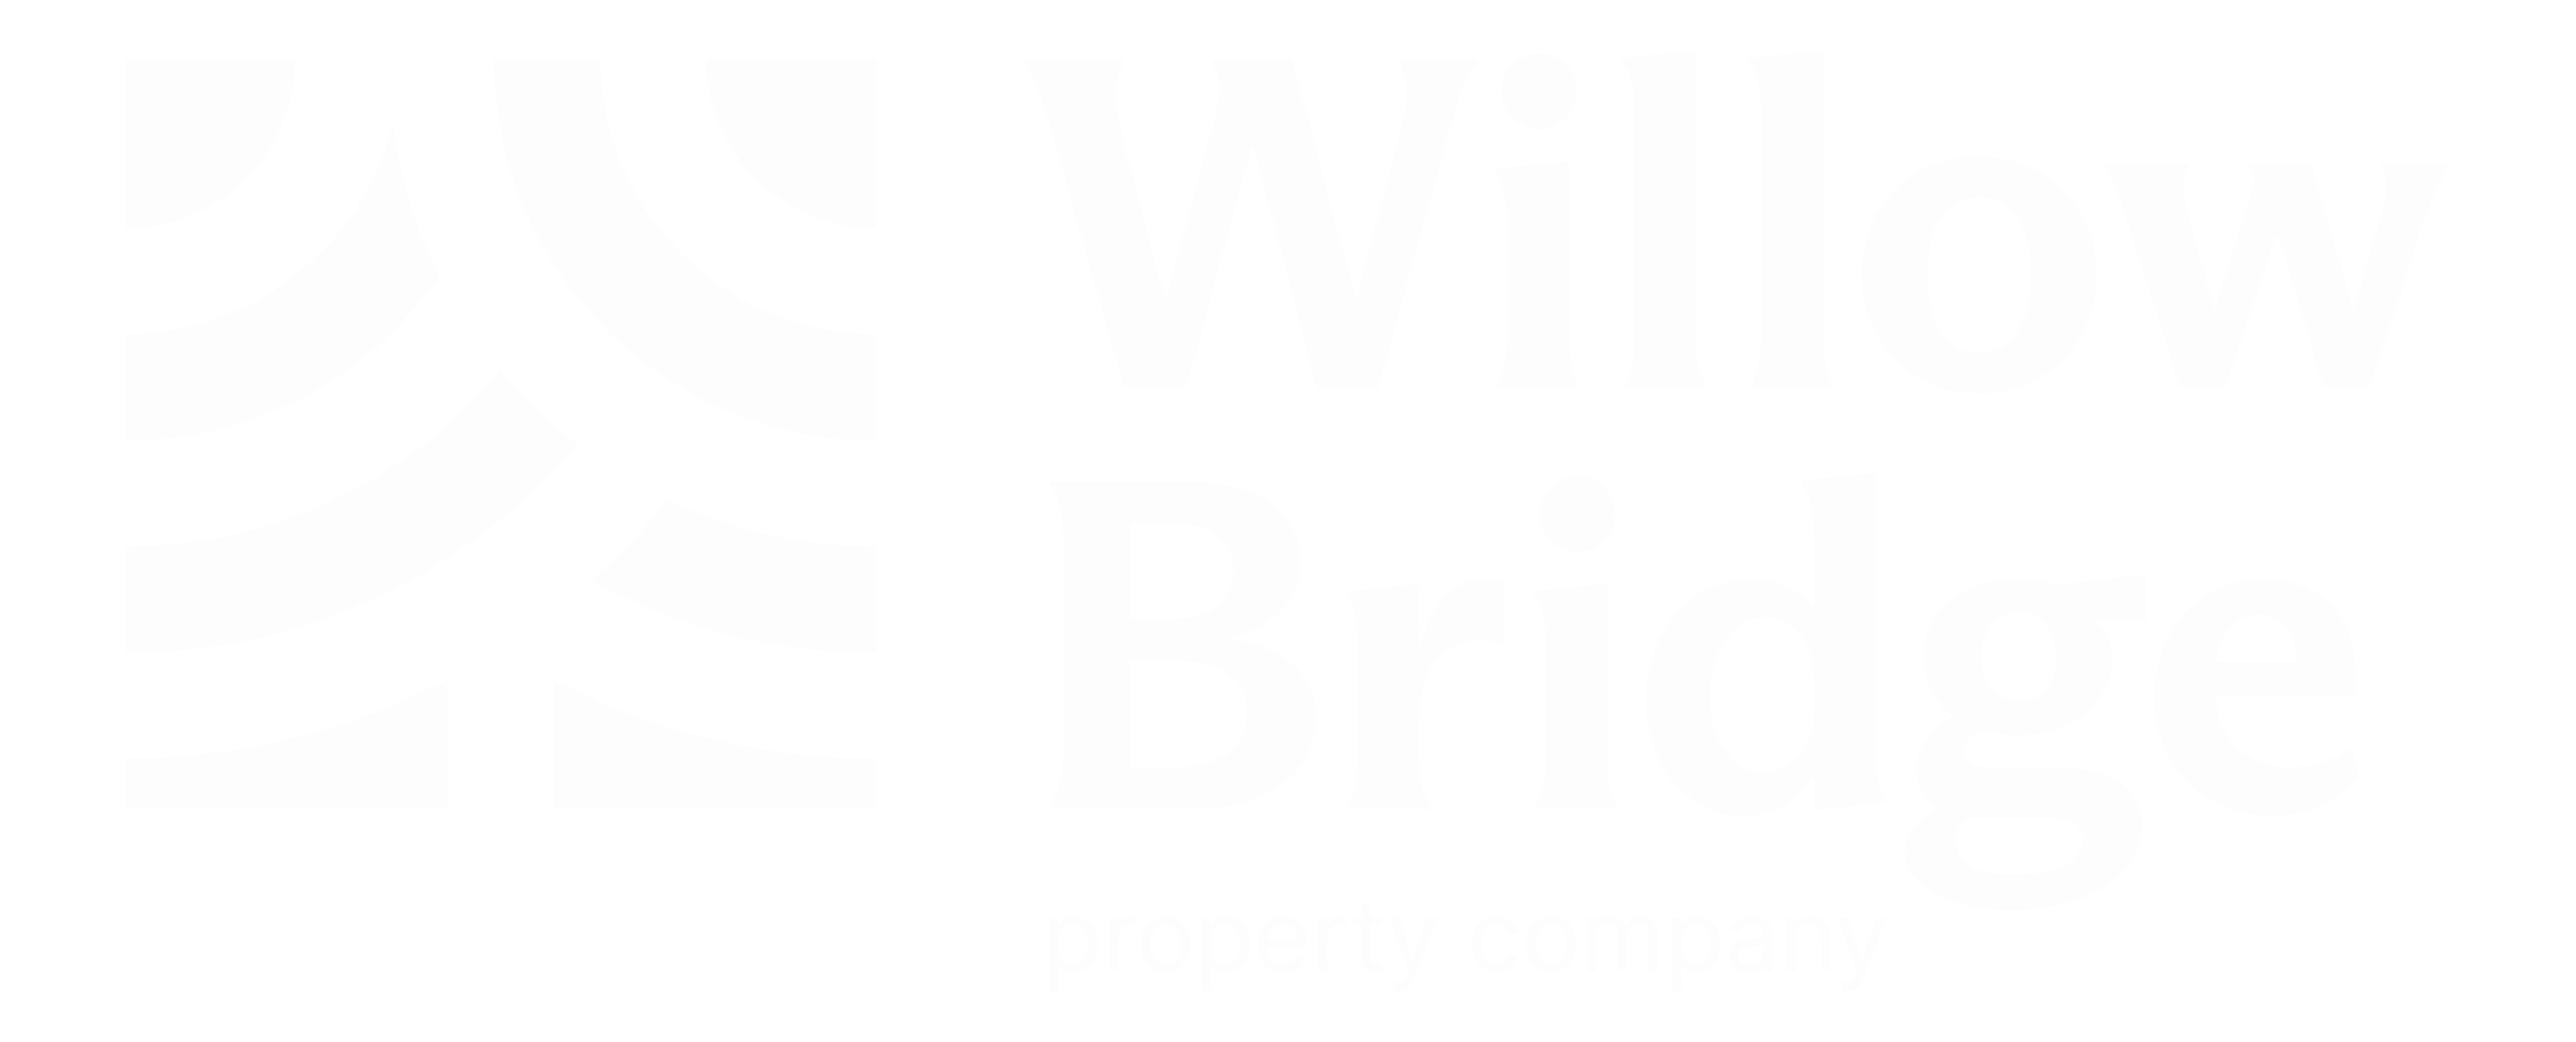 Willow Bridge Property Company Logo